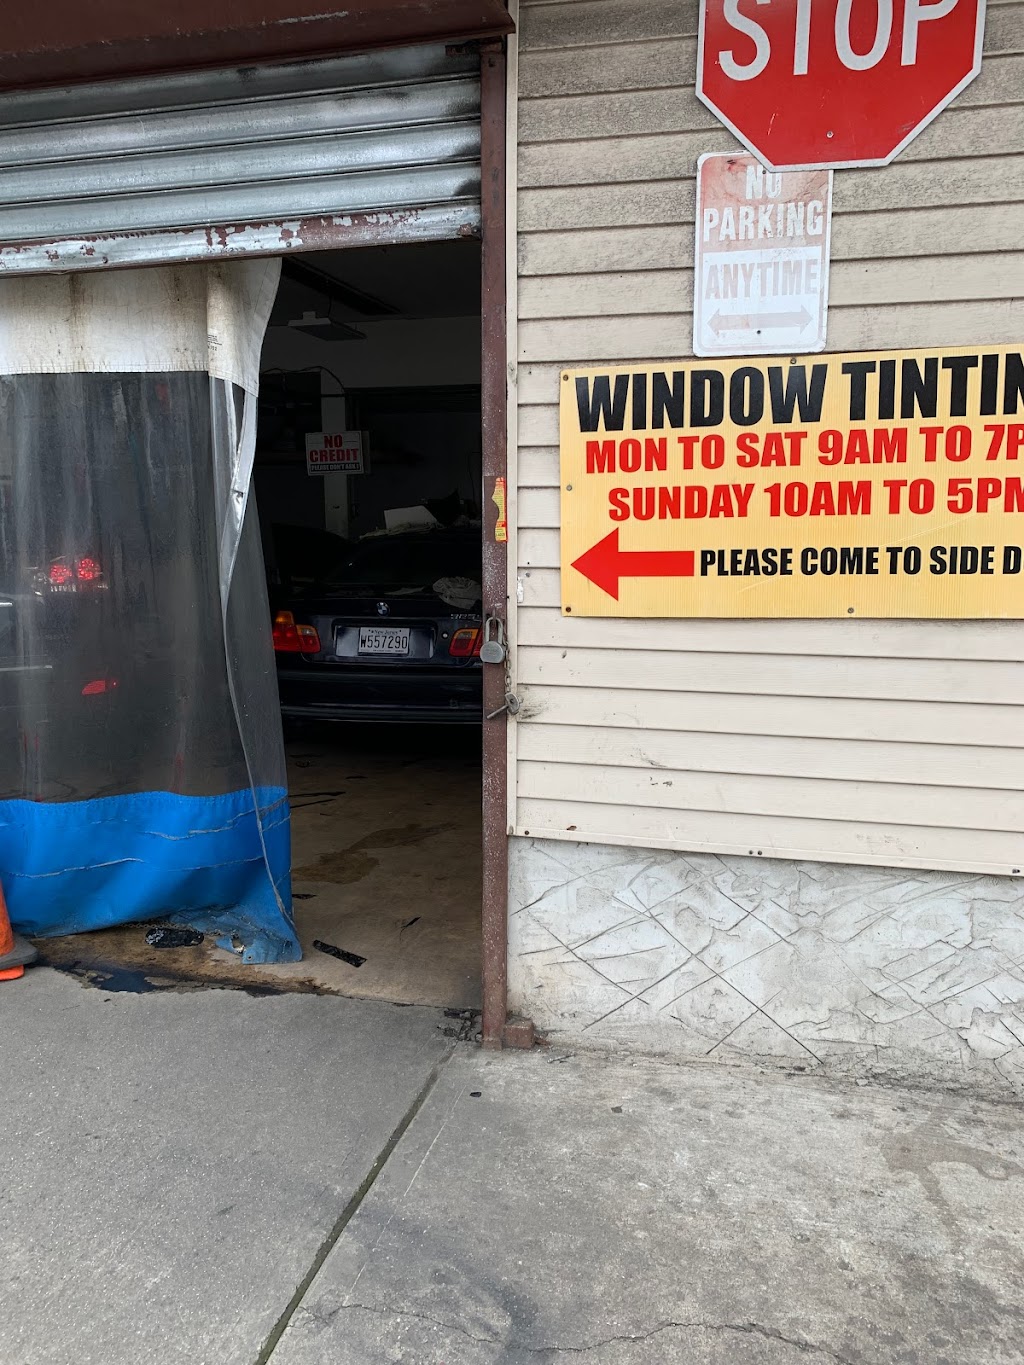 Baba Window Tinting | 844 Clinton Ave, Newark, NJ 07108, USA | Phone: (973) 303-1277